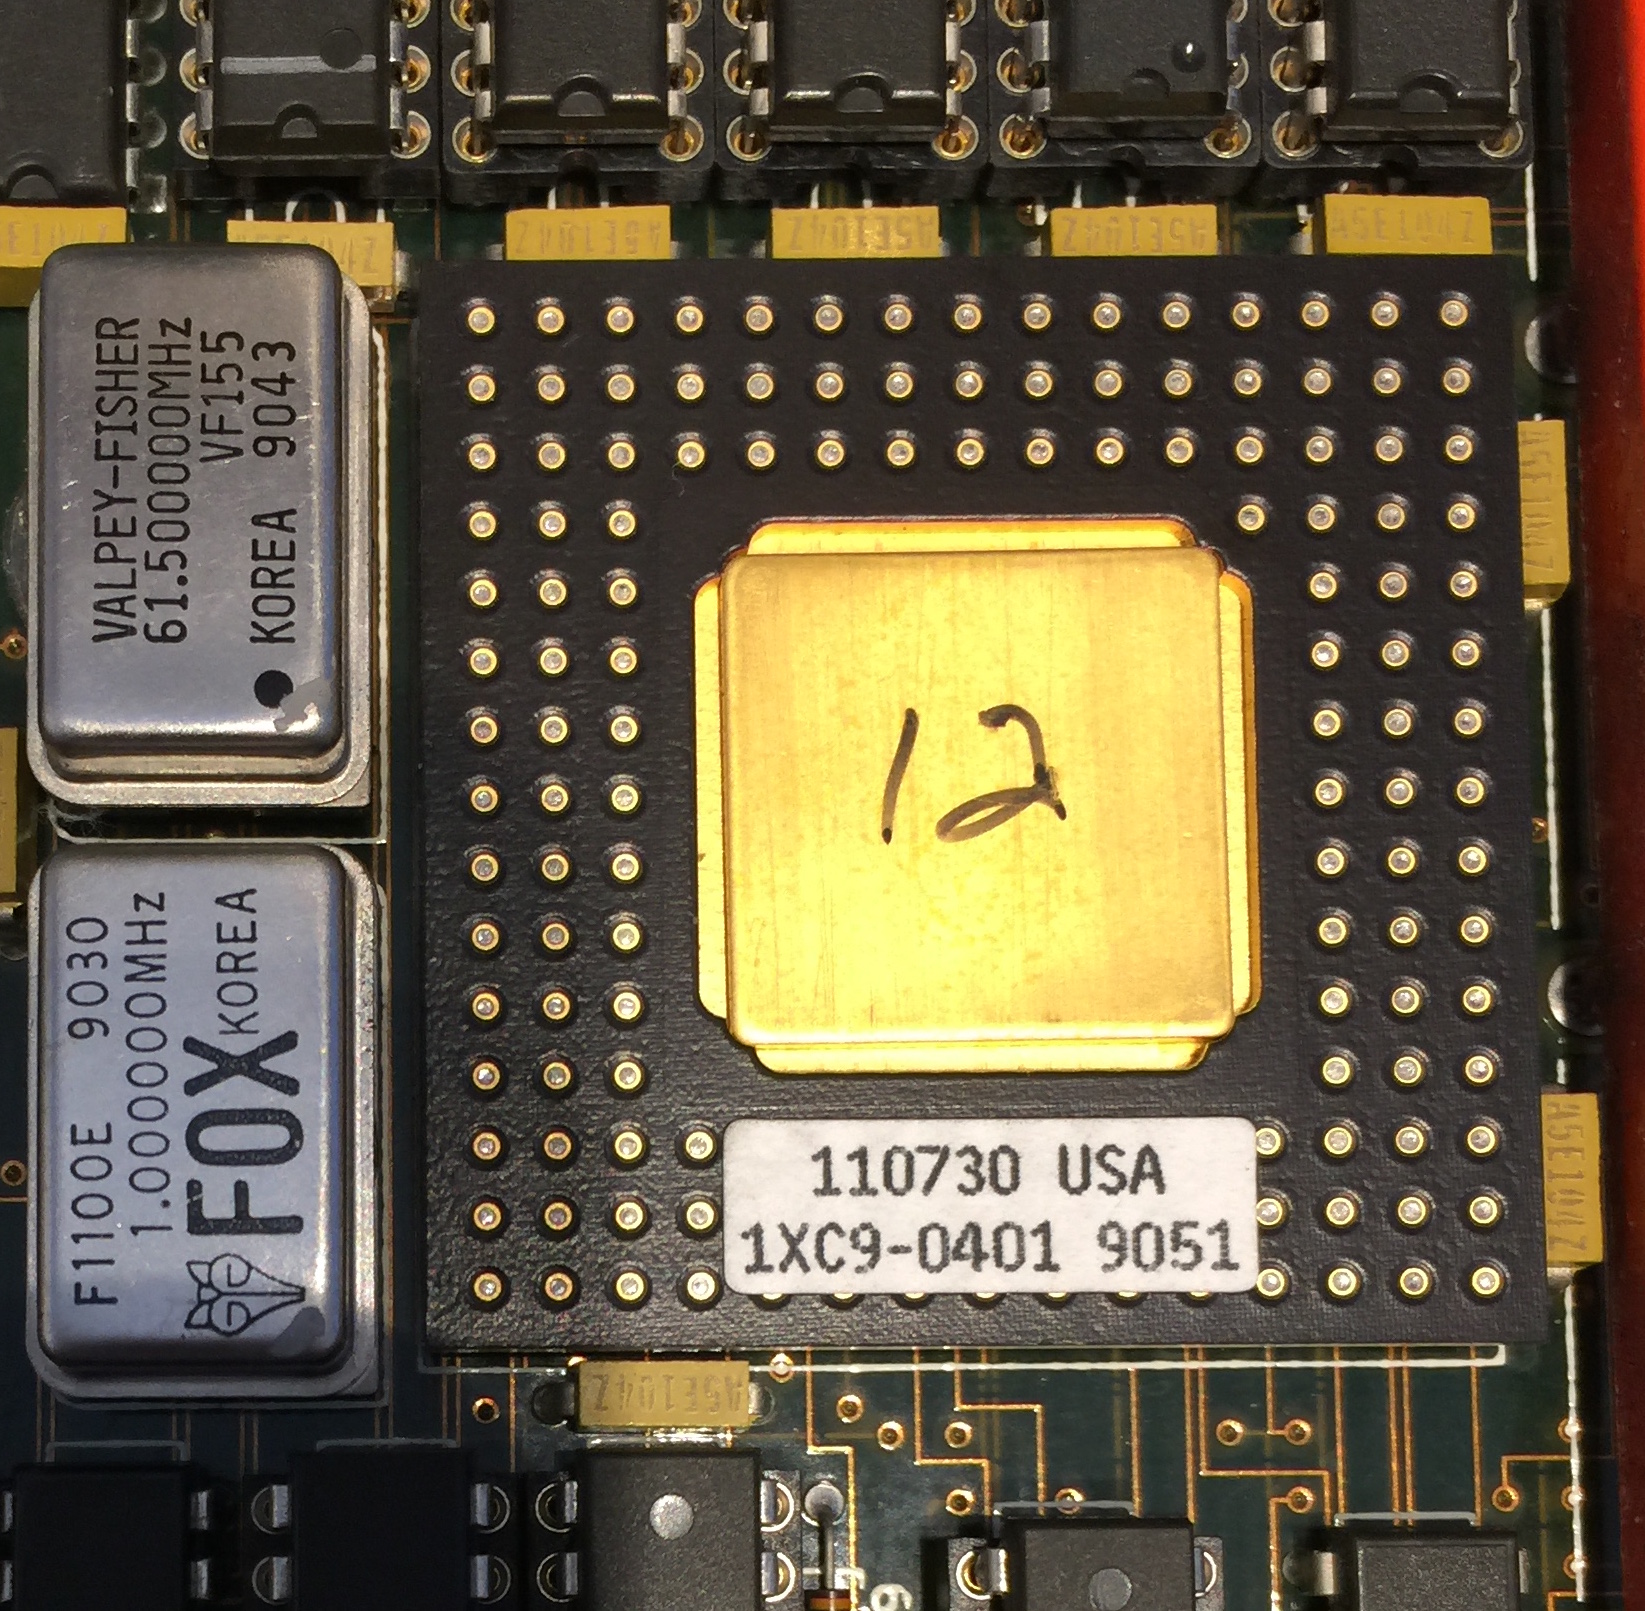 Ivory CPU Heatsink and Instability